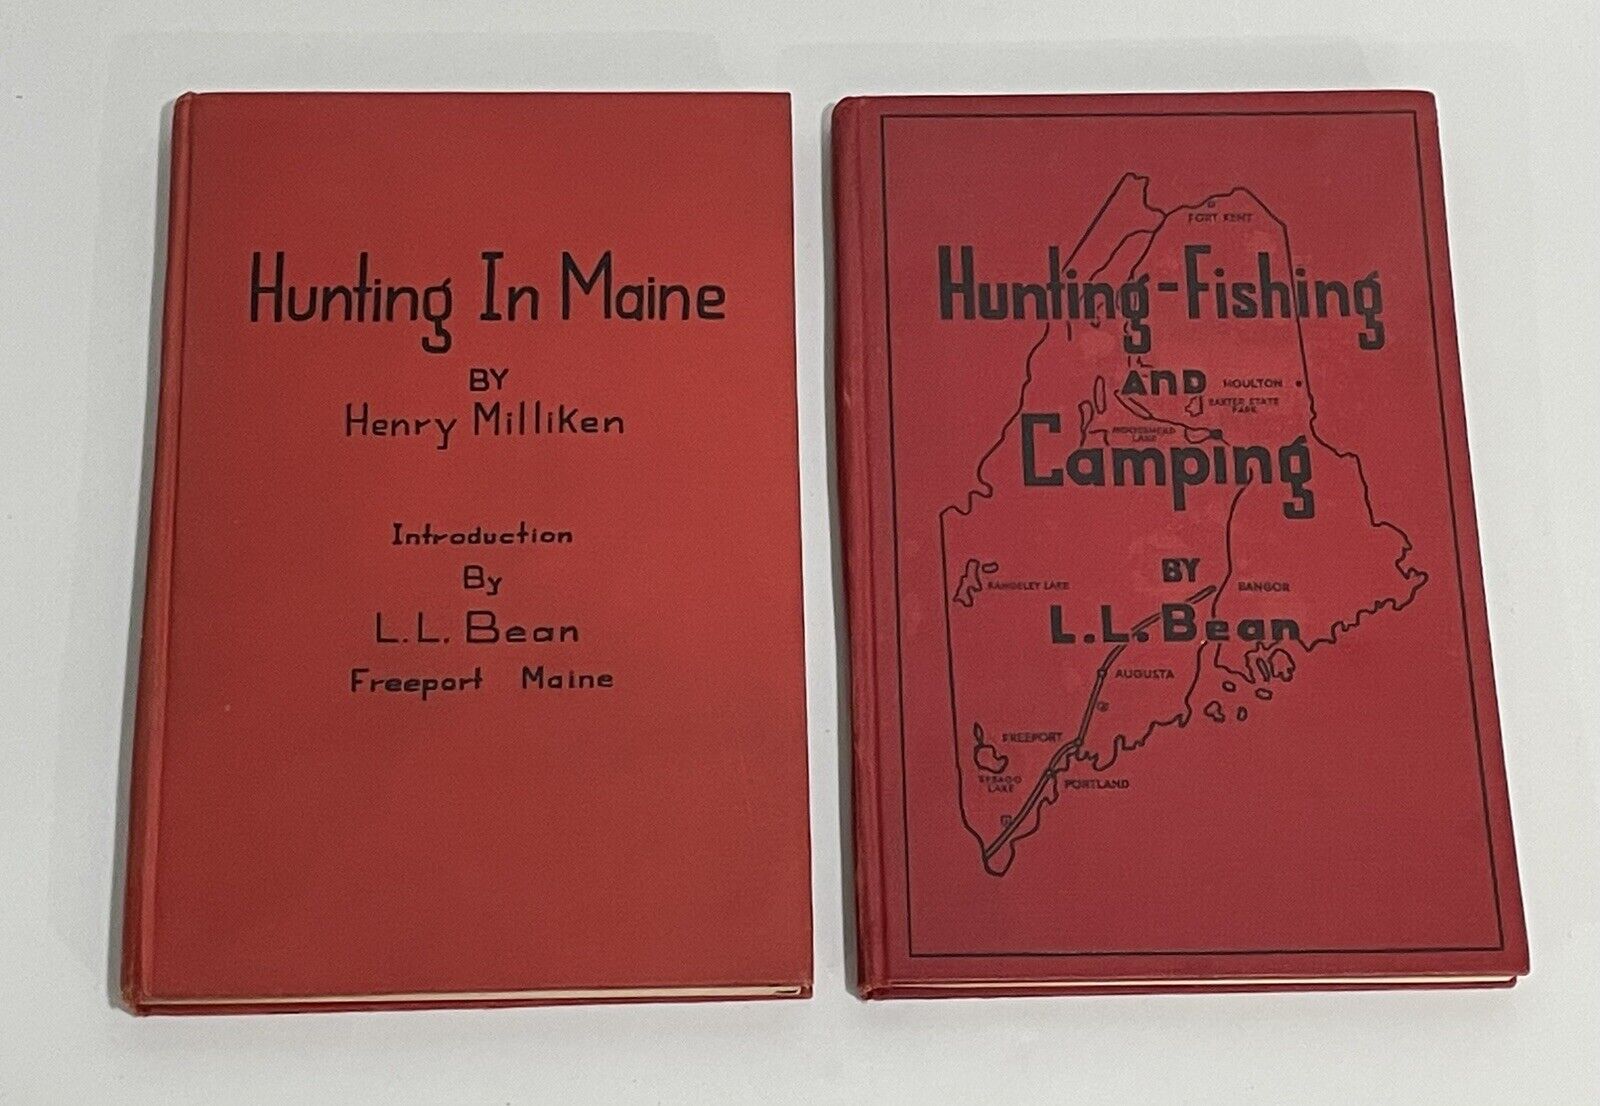 LL Bean Book Hunting Fishing Camping Rare Freeport Maine Henry Milliken Vintage